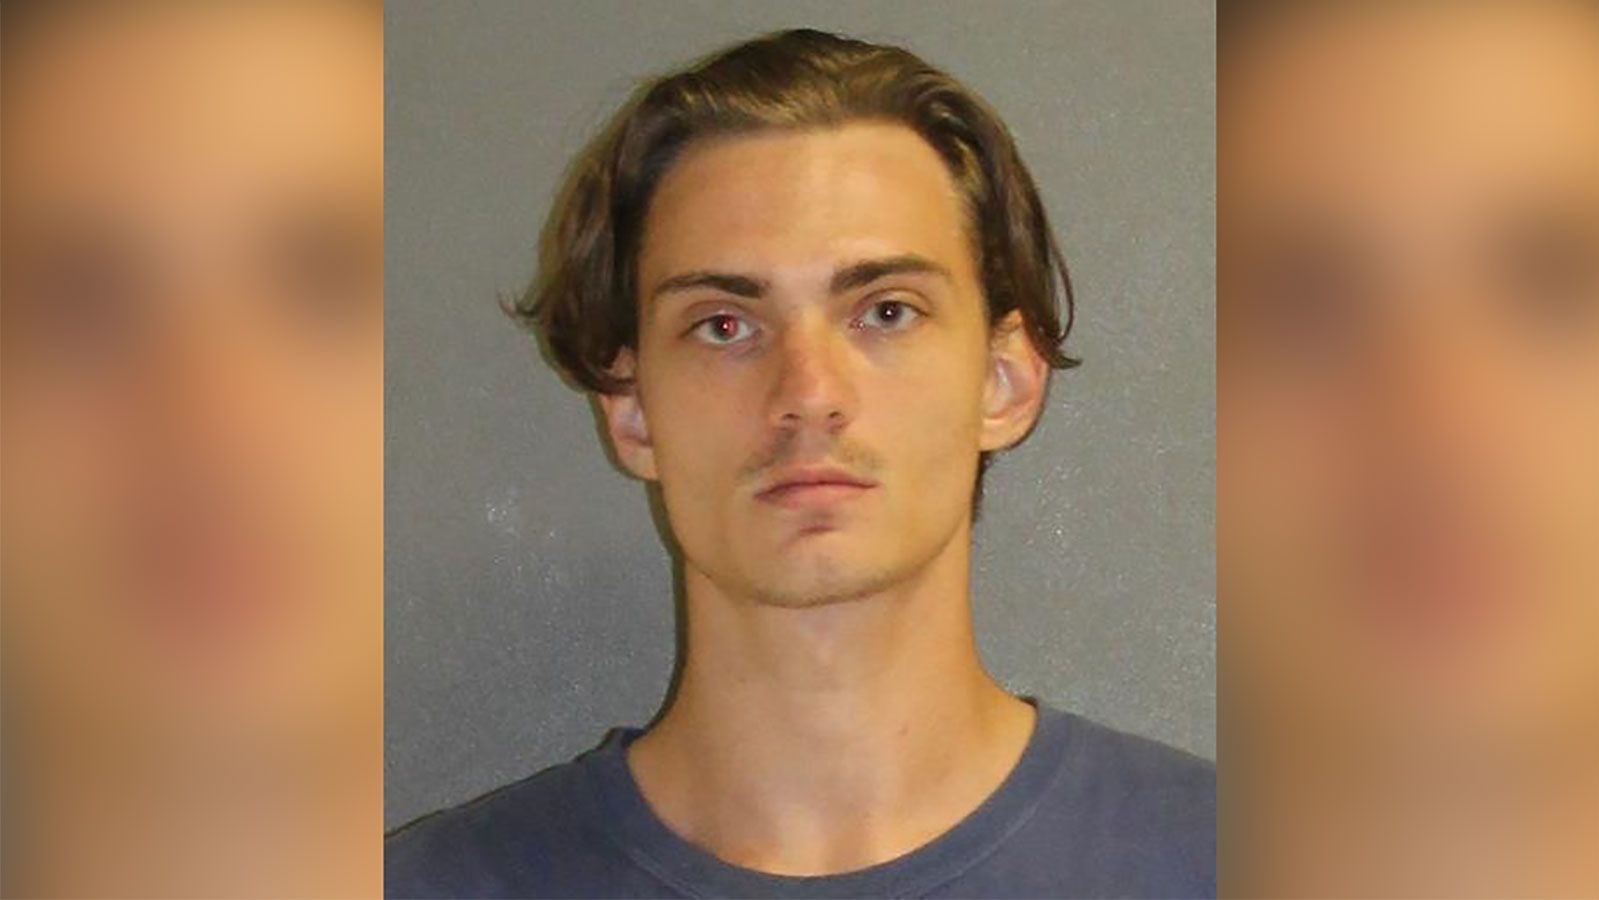 Tristan Scott Wix, 25, was arrested by authorities in Daytona Beach.